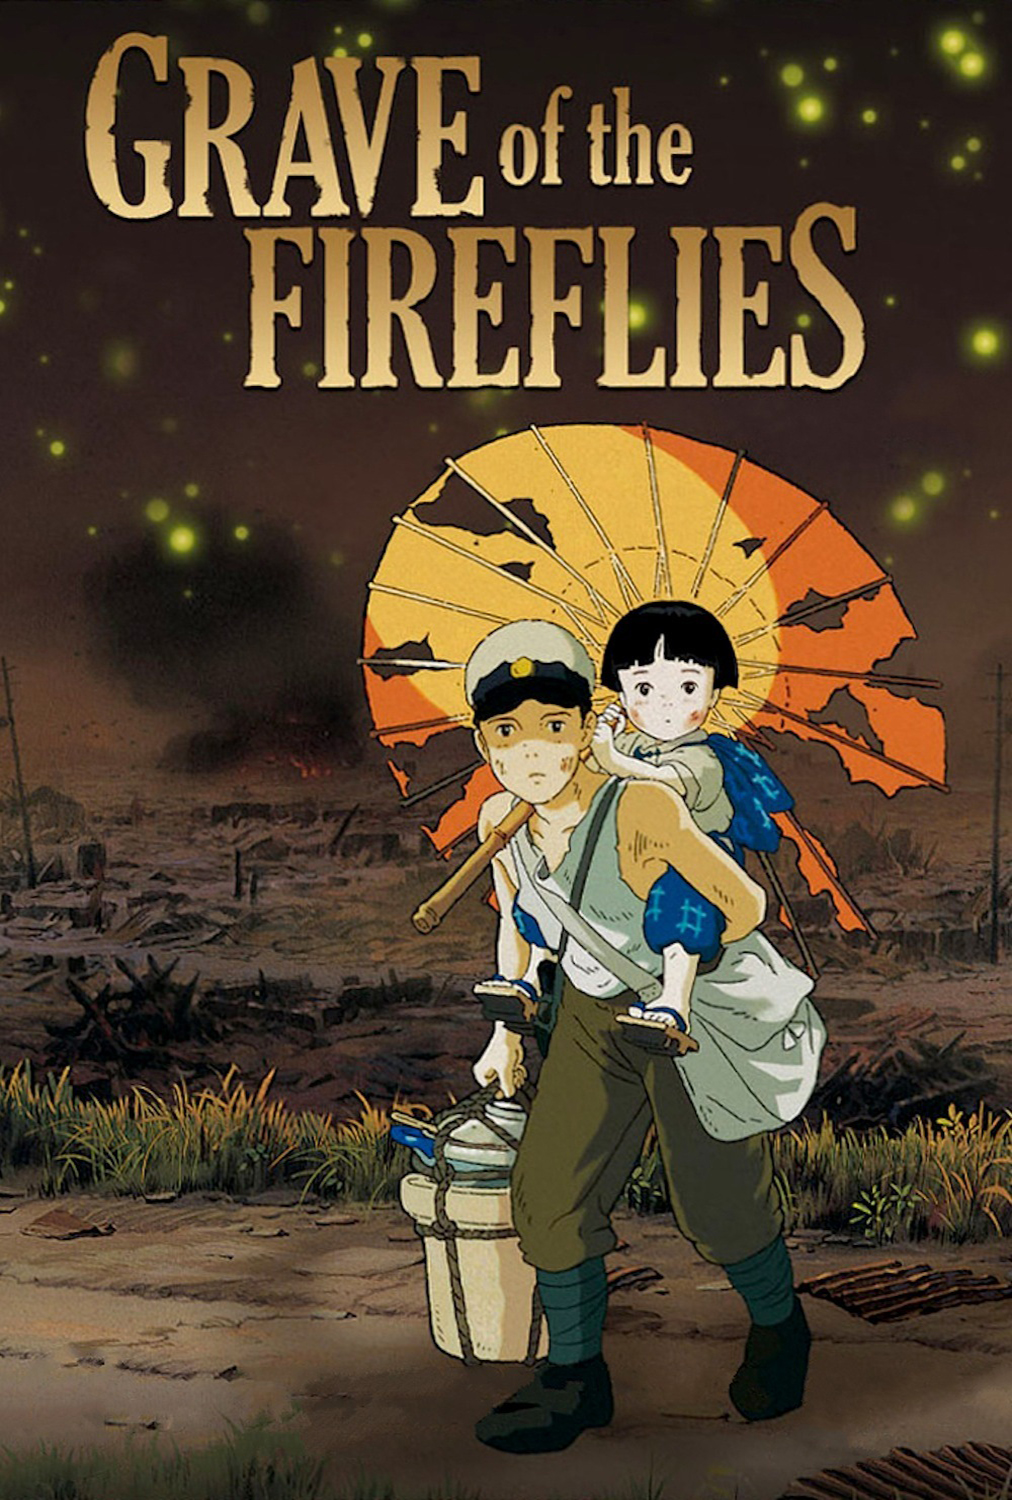 Fıreflıes - ✨90s anime aesthetic✨ -firefly | Facebook